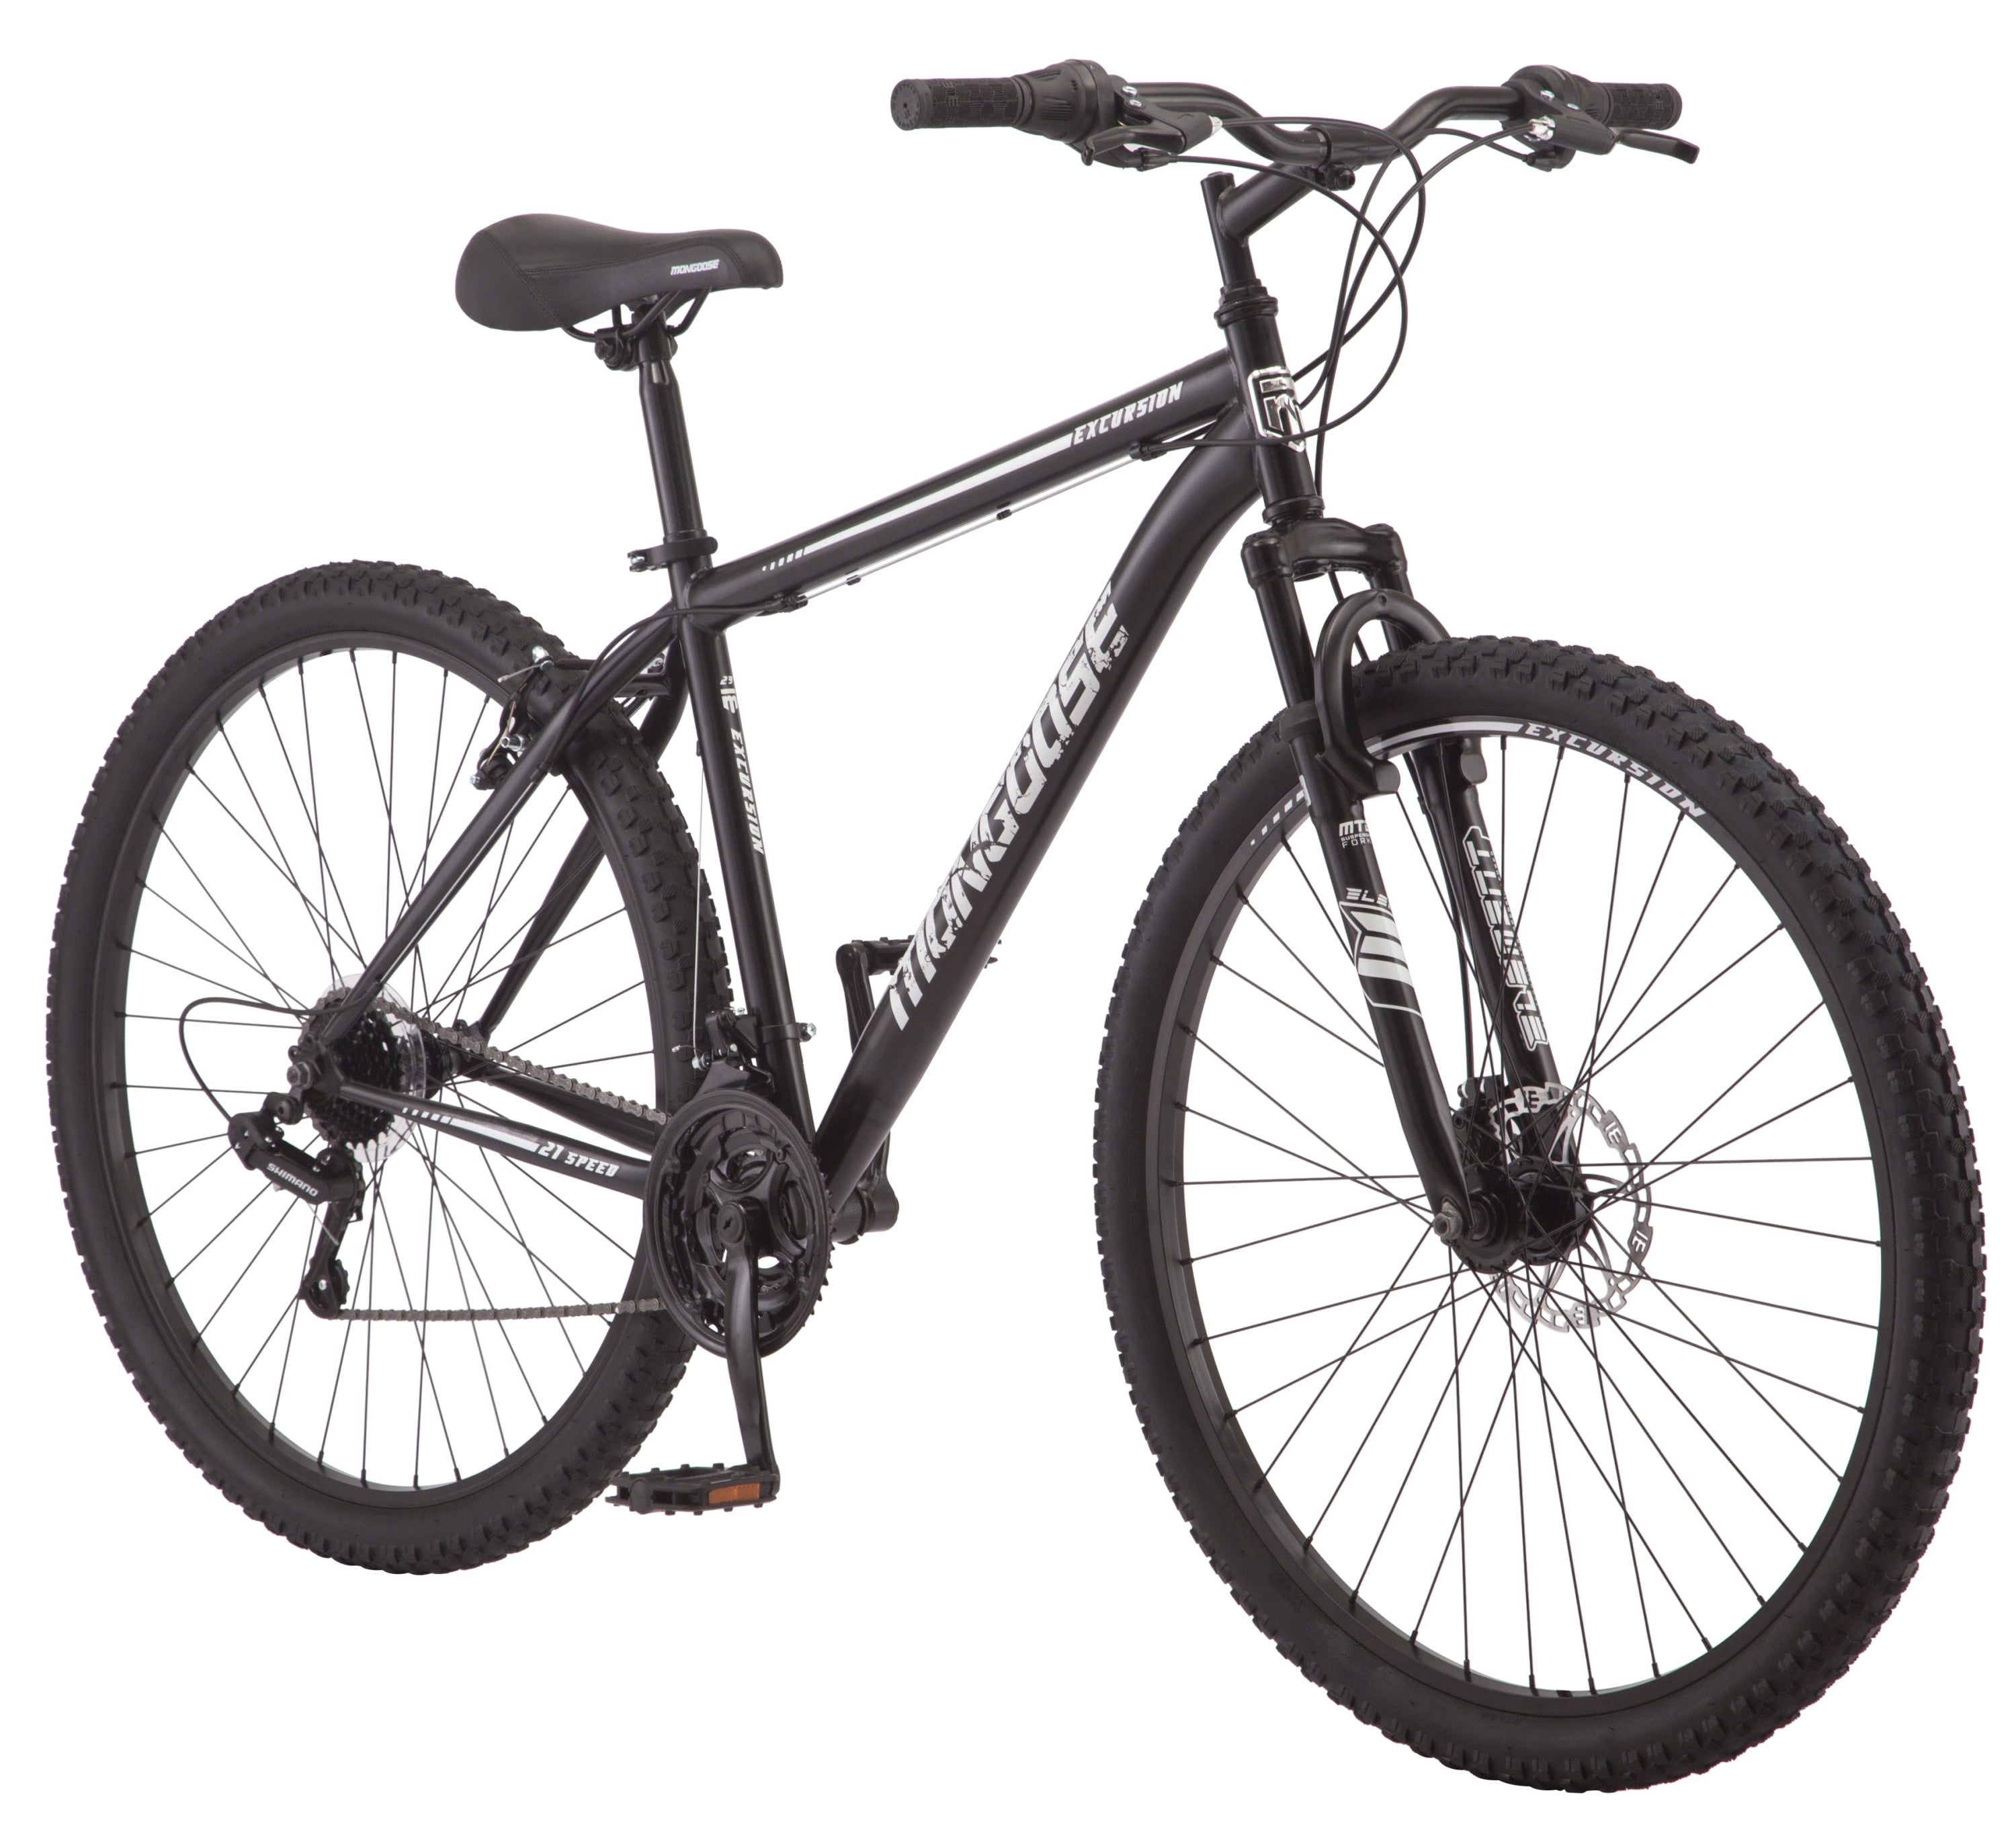 Mongoose Excursion mountain bike, 21 speeds, 29 inch wheels, mens